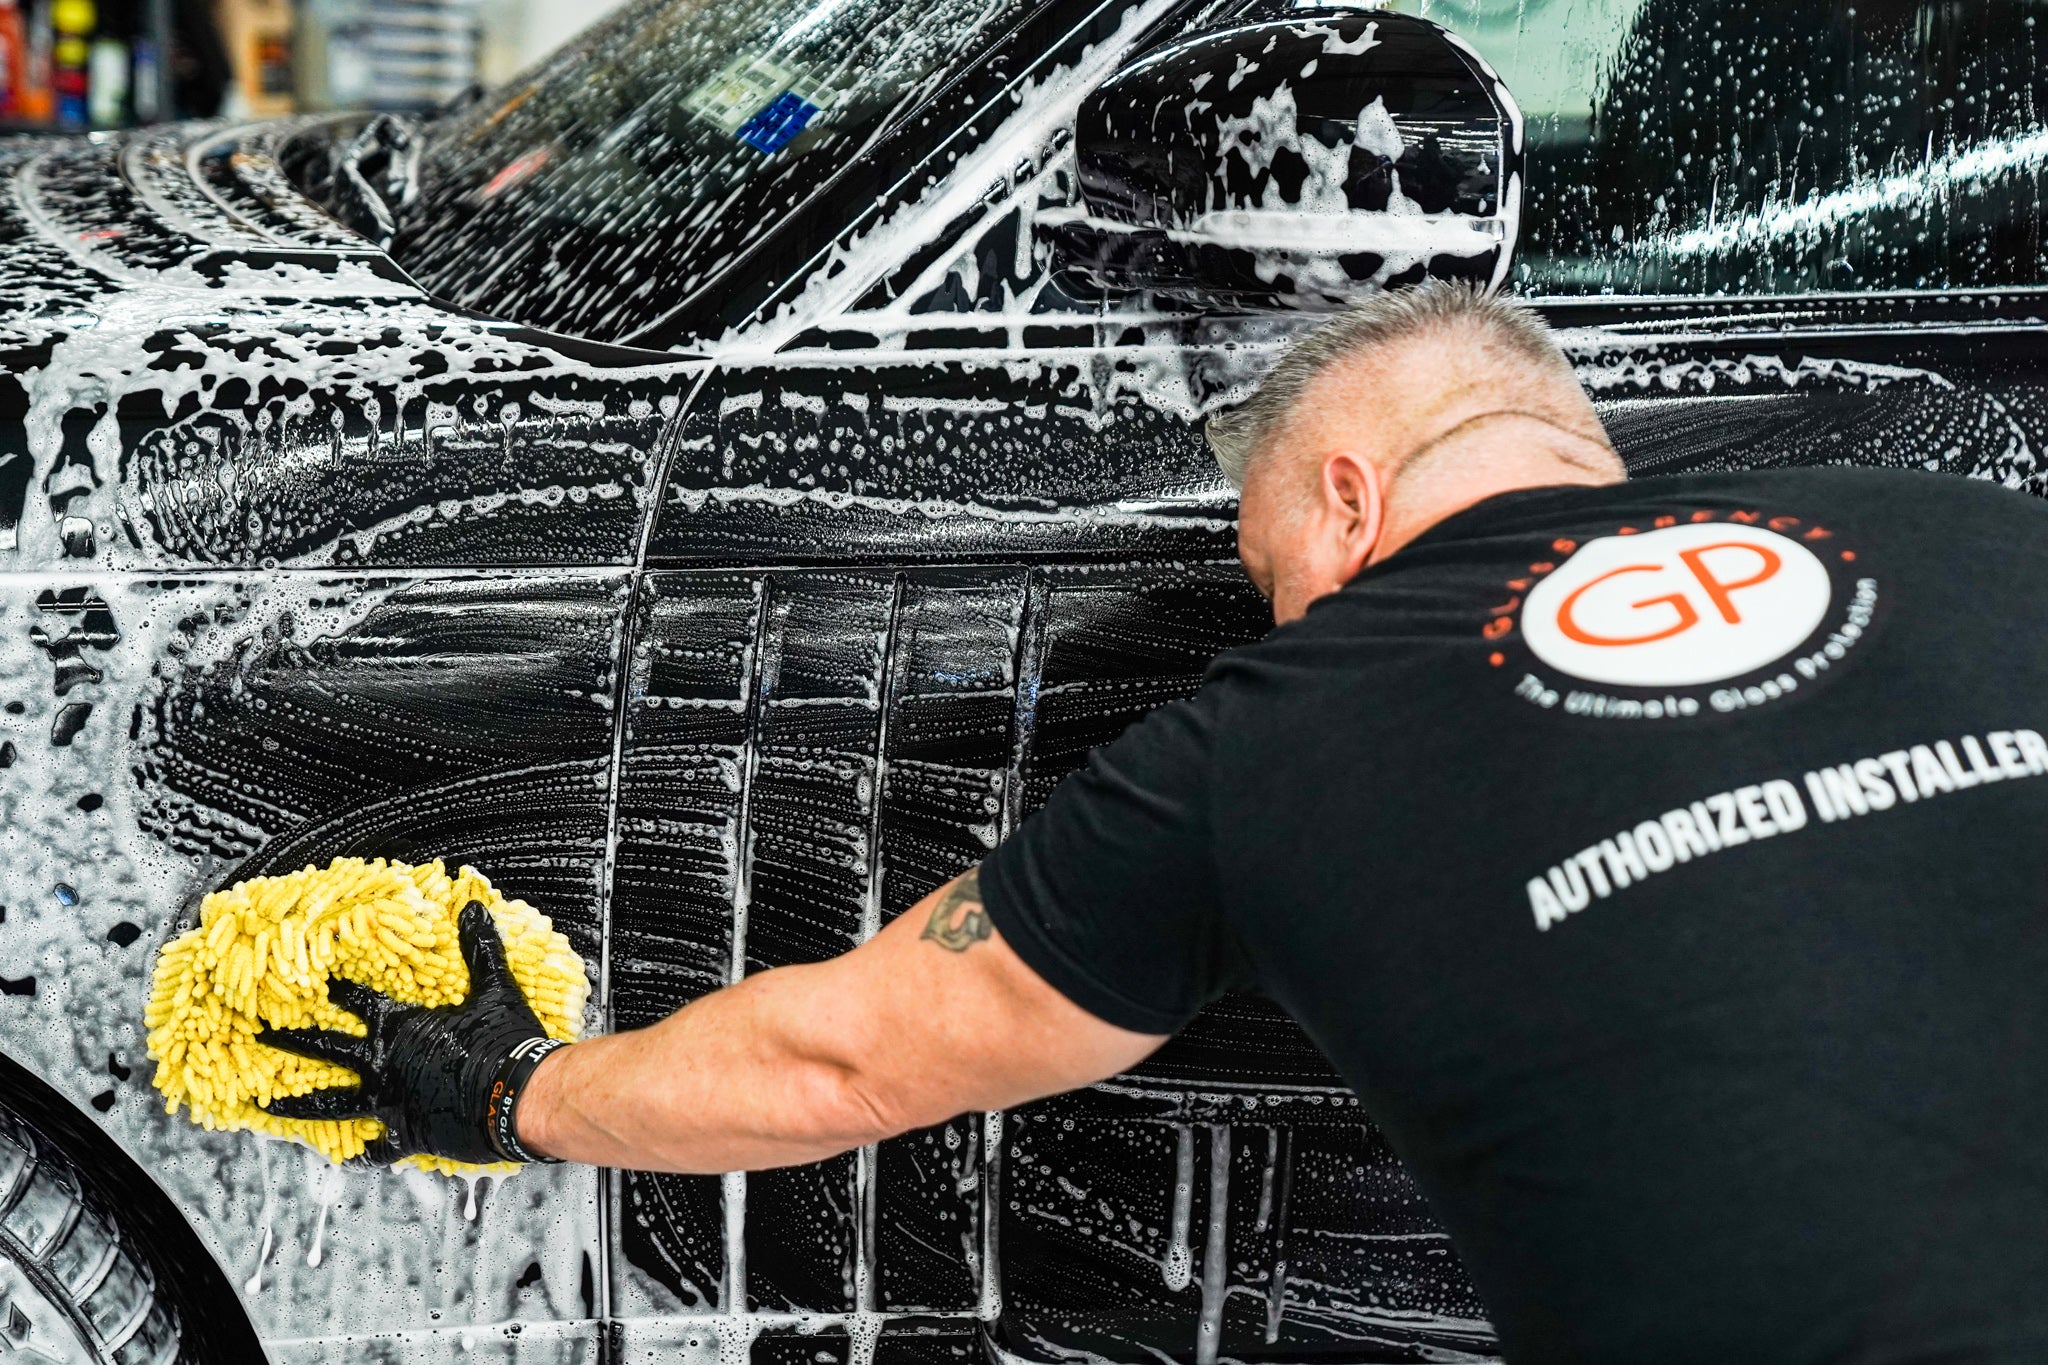  GlassParency S2 Soap (PH Neutral) Car Wash Soap (8oz.) Safe on  Wax & Ceramic Coatings, High Foam Formula